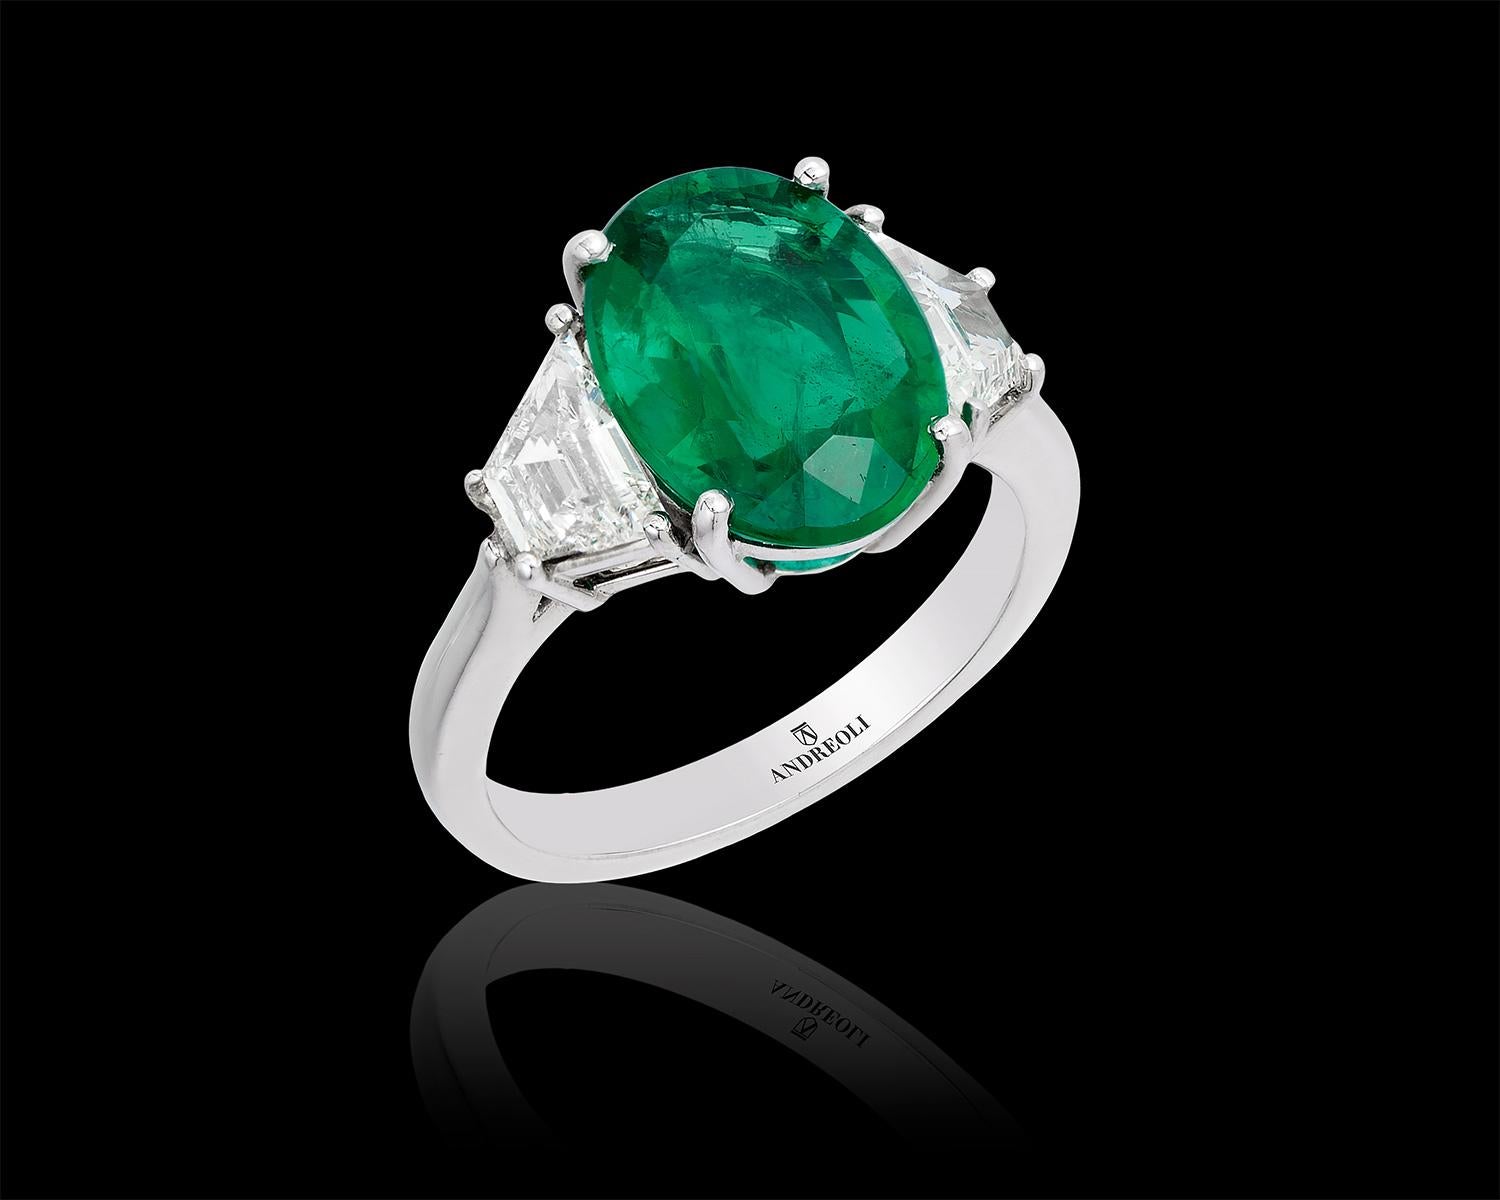 Oval Cut Andreoli CDC Certified 4.05 Carat Zambian Emerald Diamond Platinum Ring